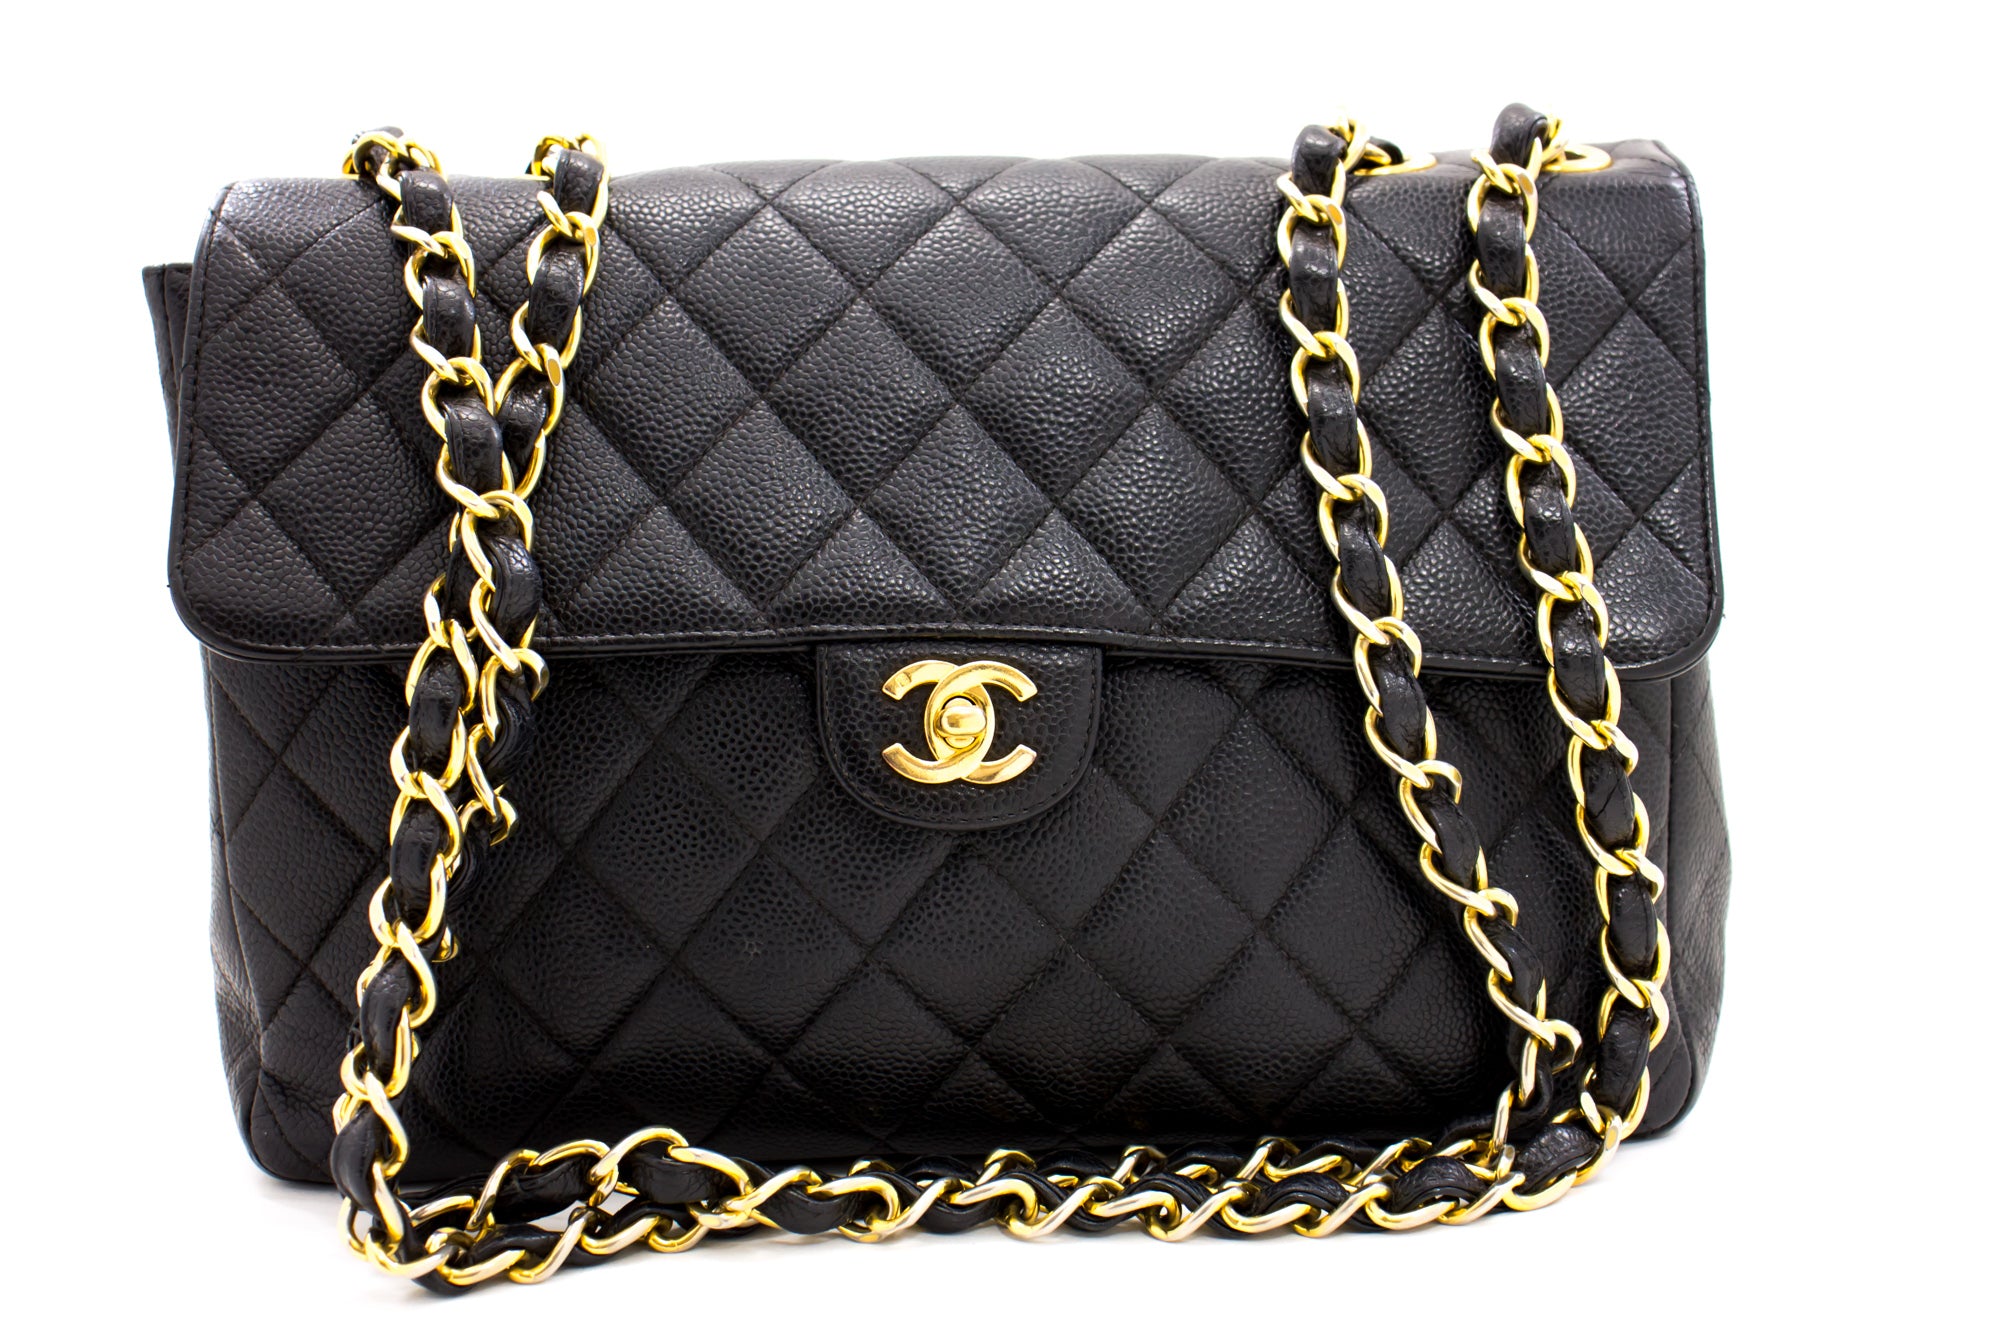 Chanel Jumbo Double Flap Caviar Leather Shoulder Bag